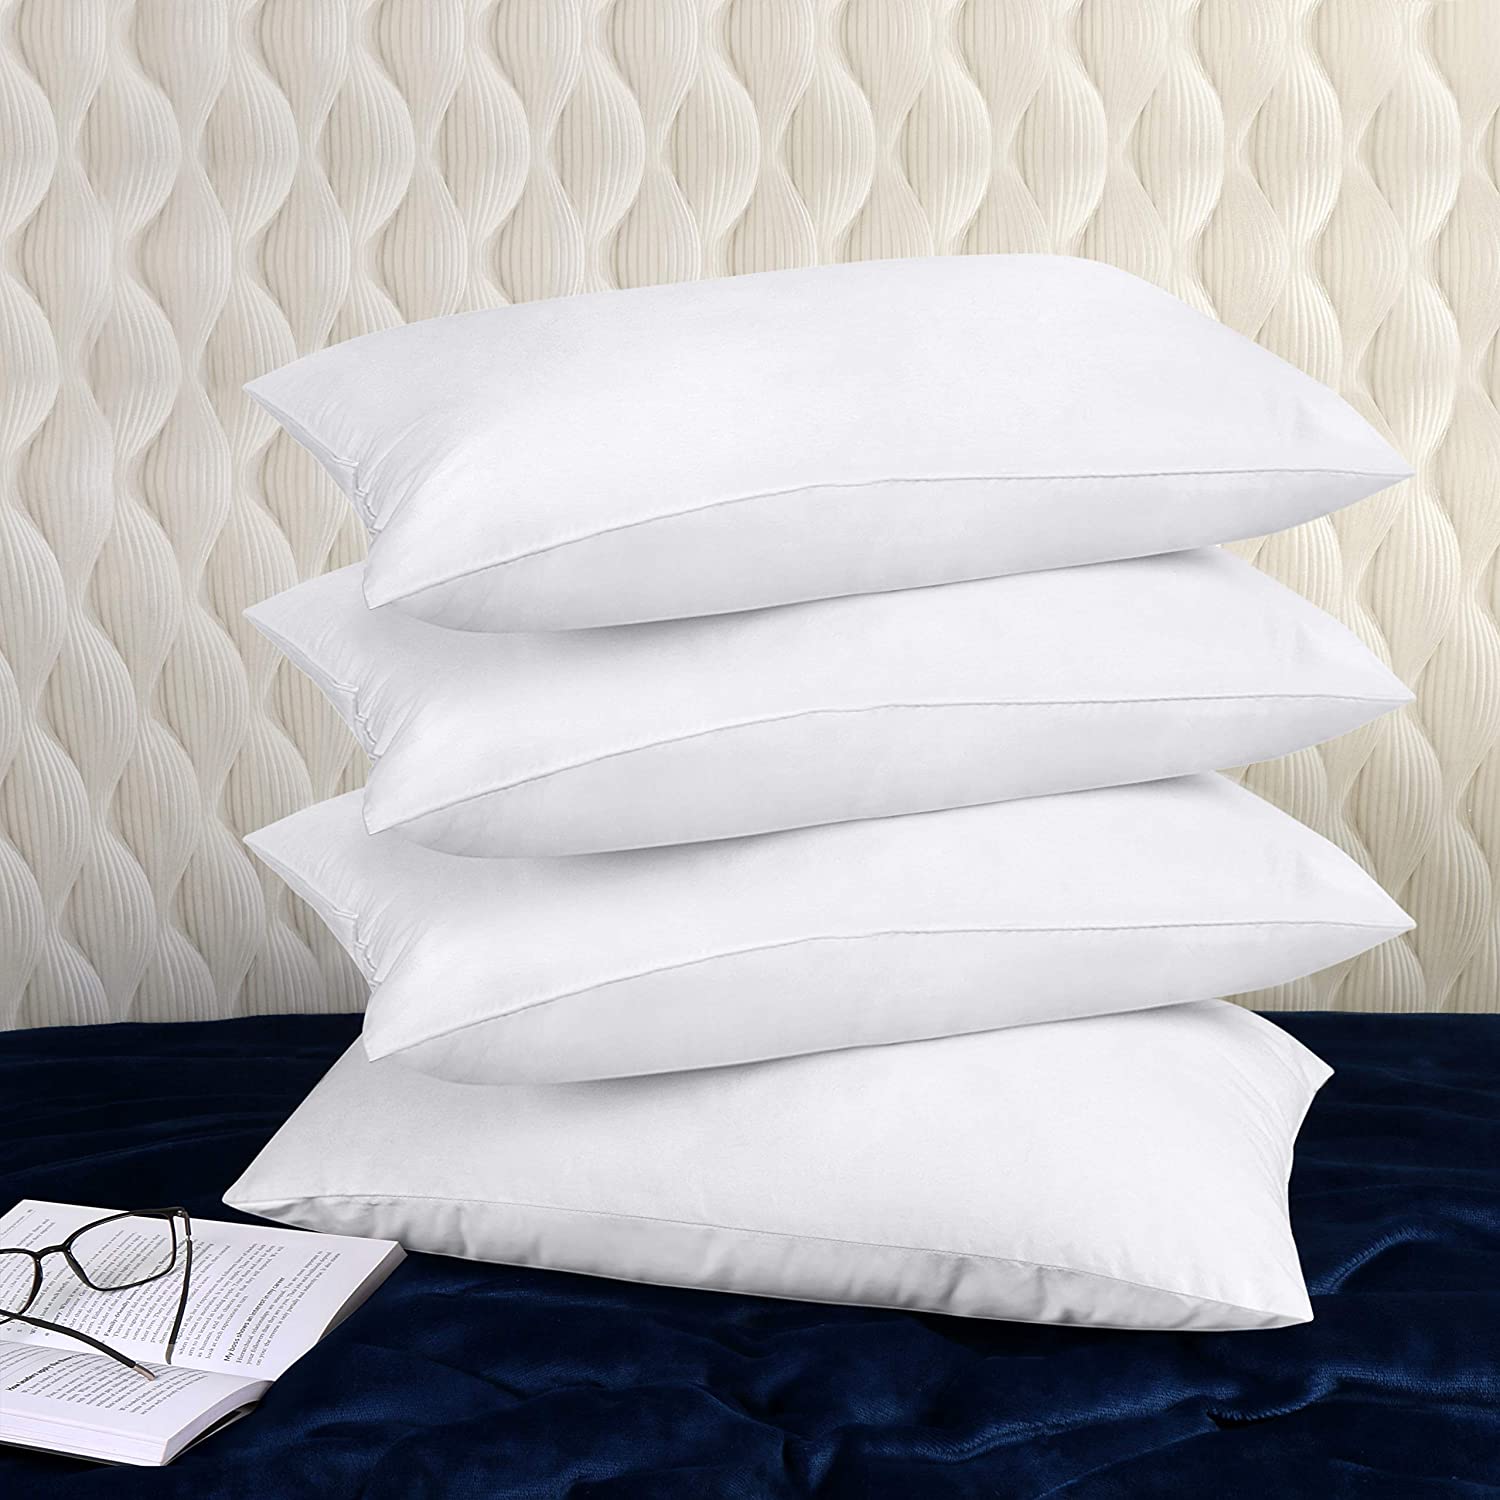 Utopia Bedding Throw Pillows Insert (Pack of 2, White) - 18 x 18